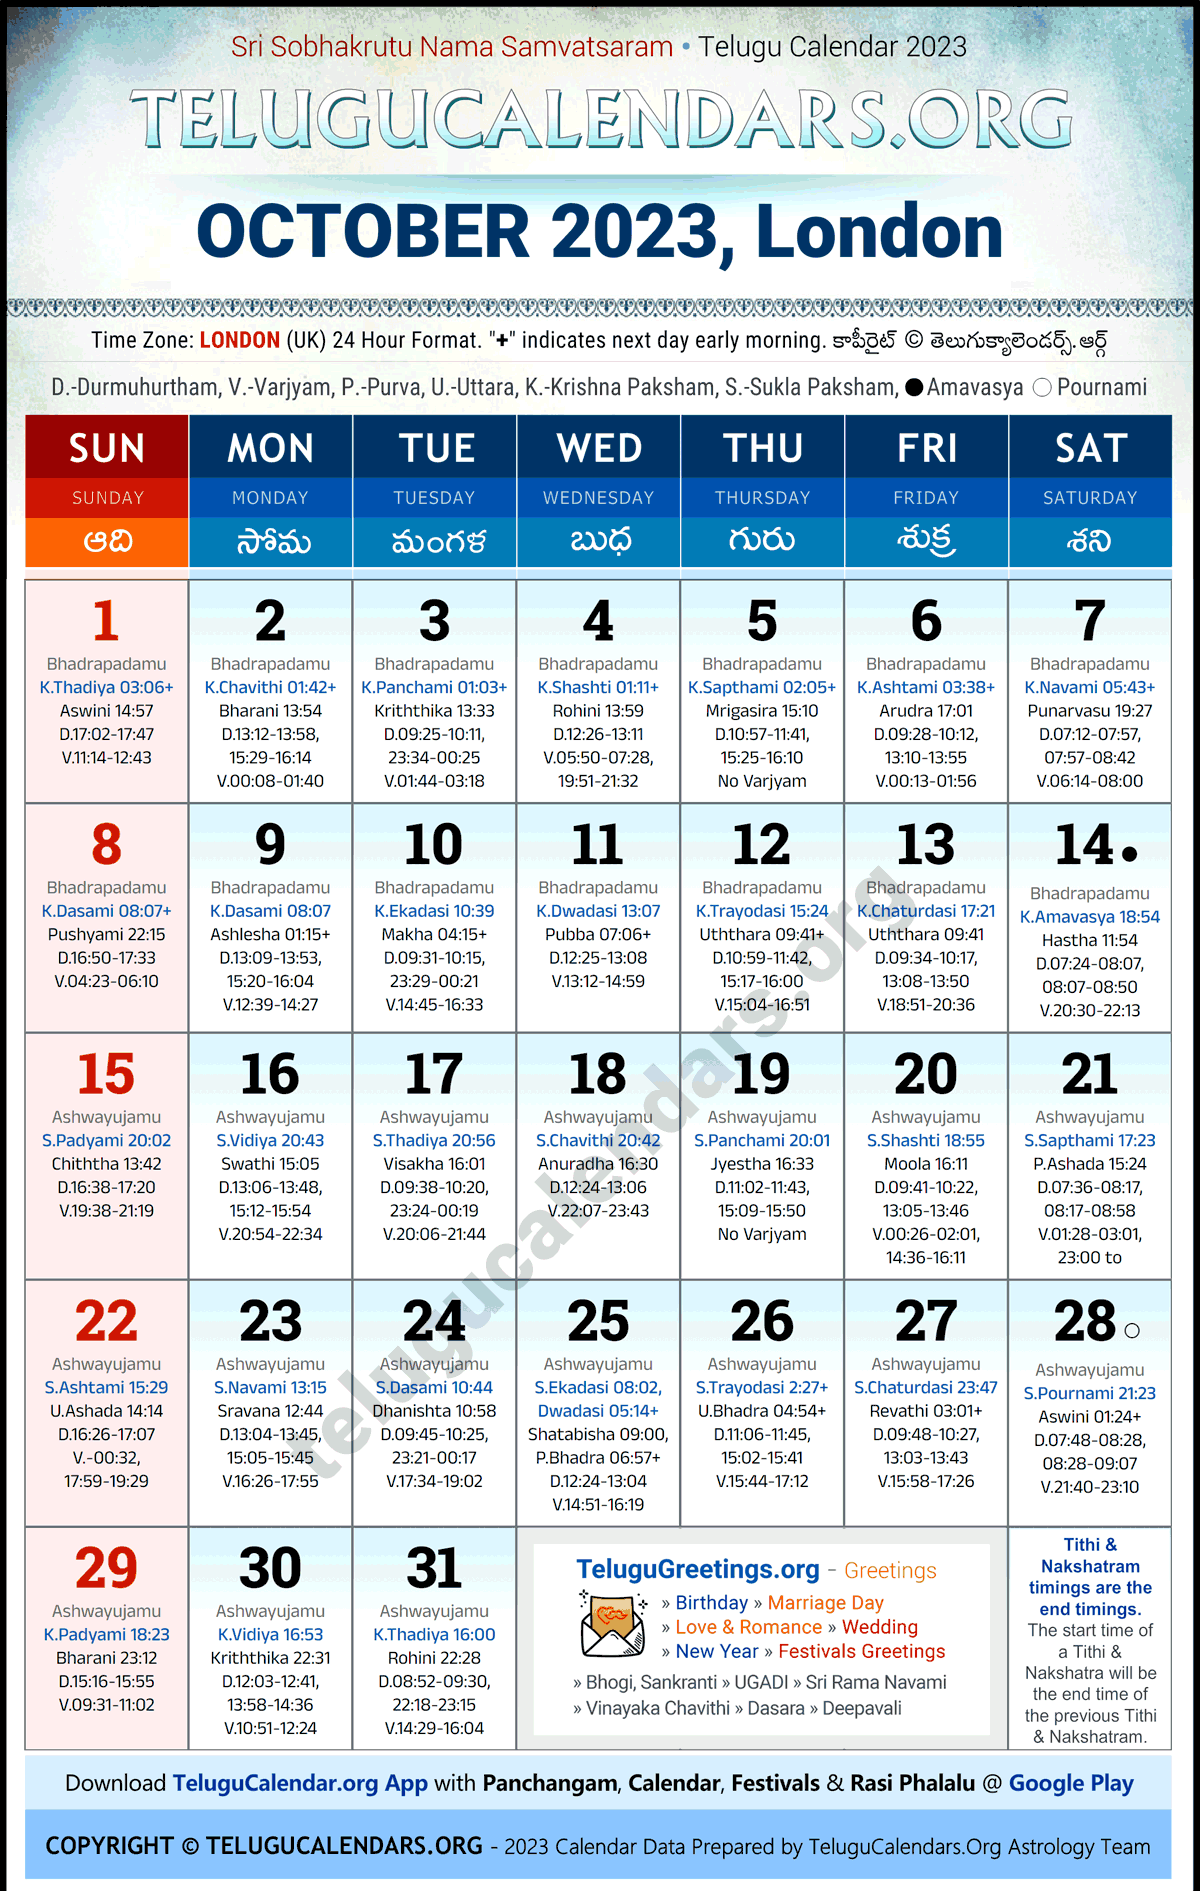 Telugu Calendar 2023 October Festivals for London